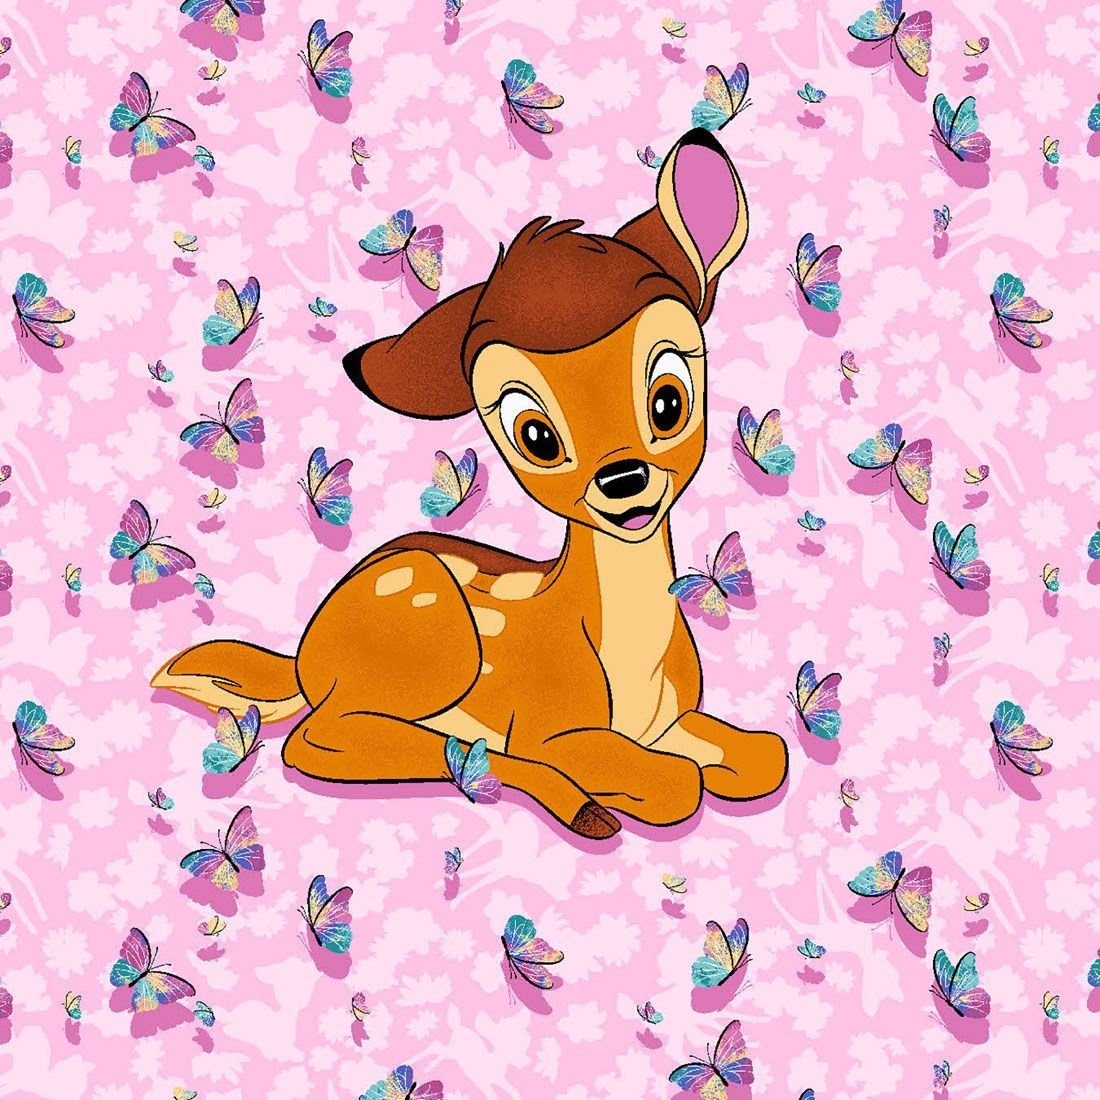 Cherokee Funktionsbluse Bunt Kasack "Bambi" Disney bedruckter Motiv mit Kasack